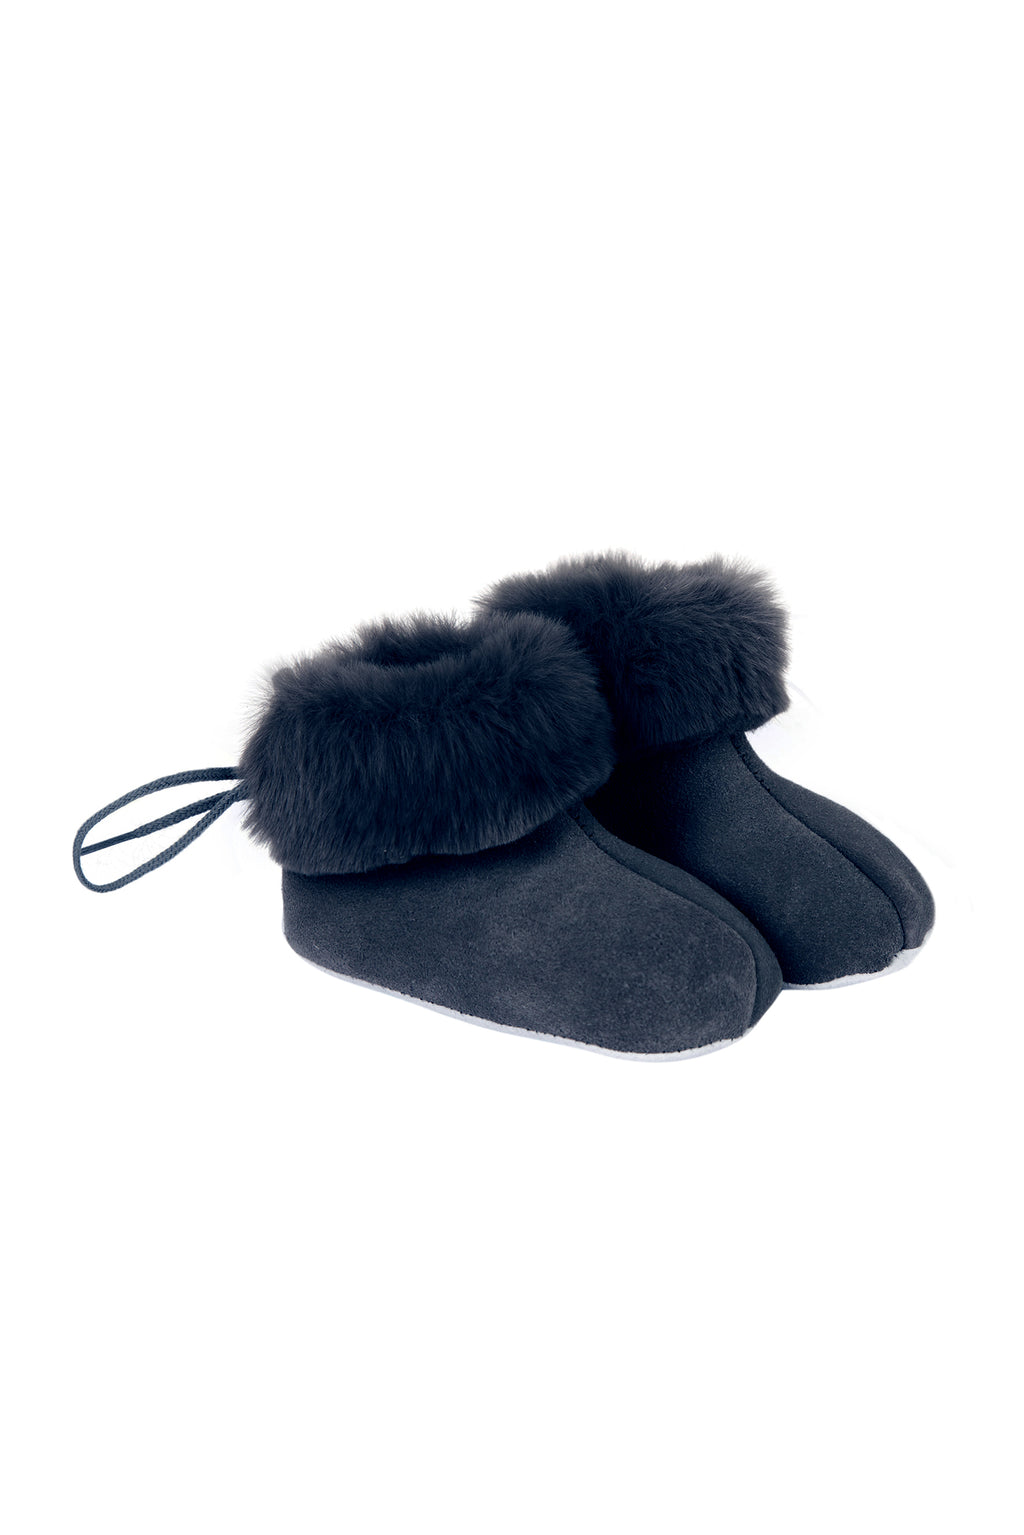 Slippers - Navy fur